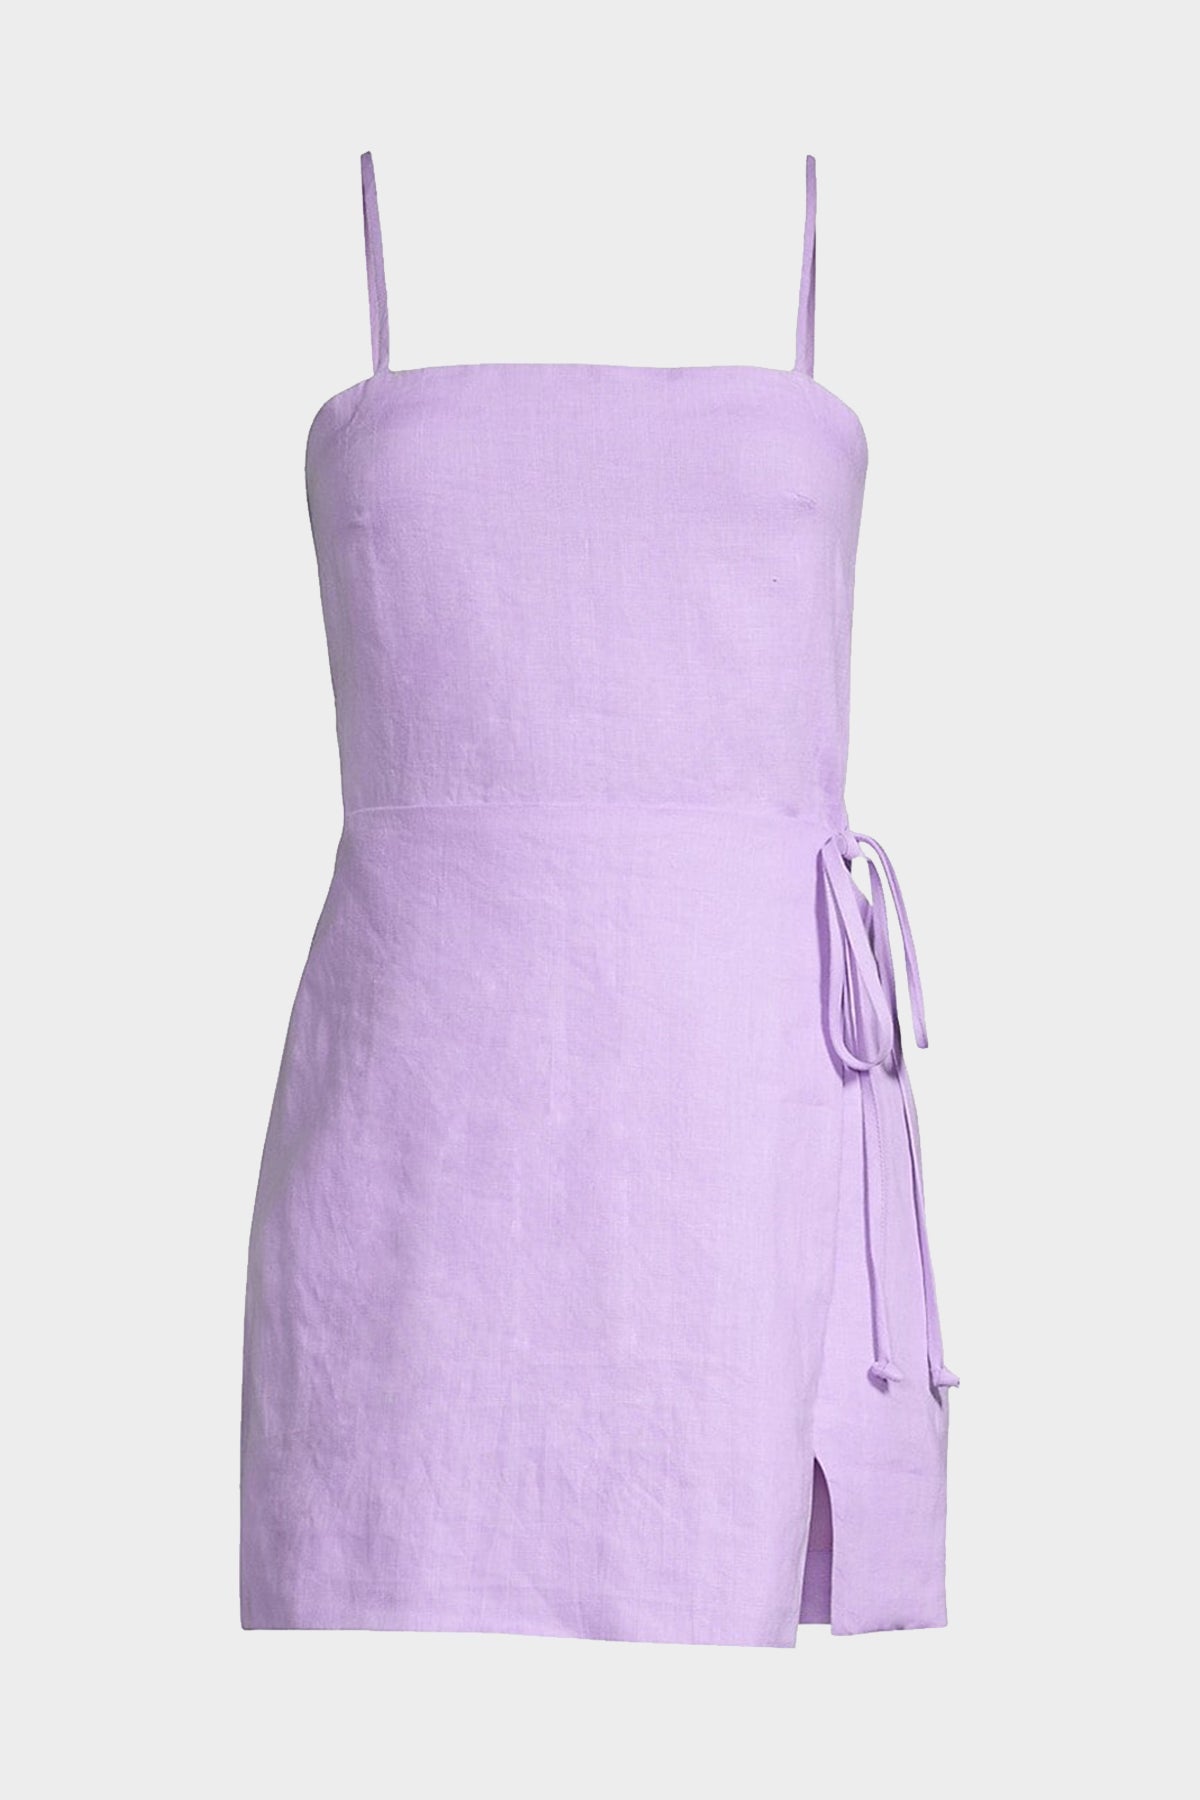 Llian Mini Dress in Lilac - shop-olivia.com